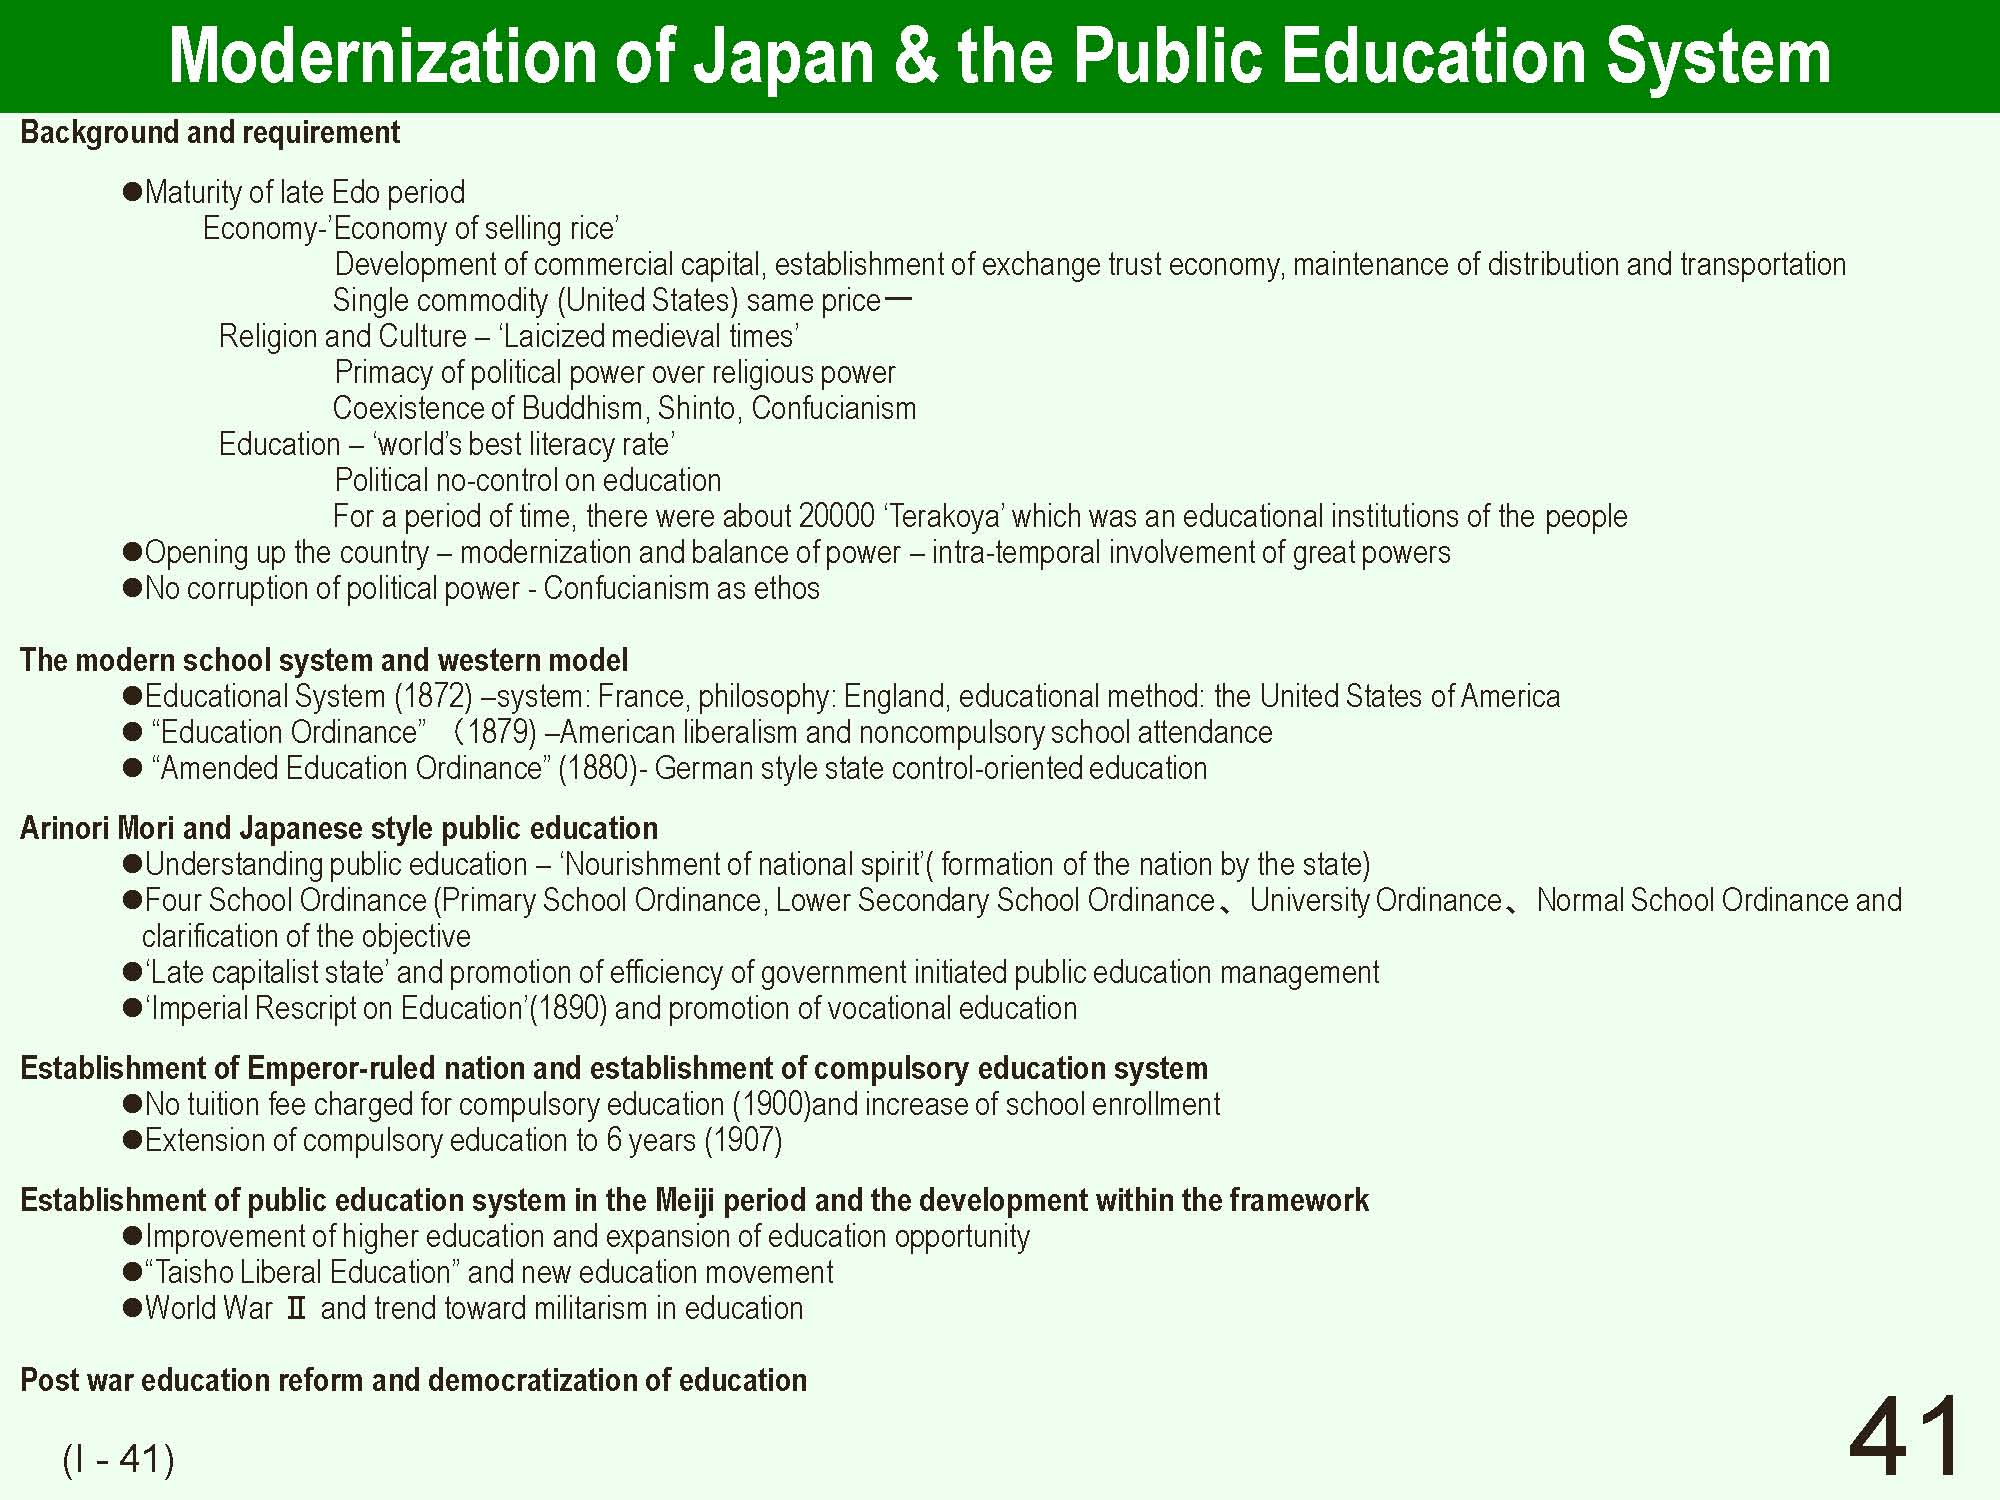 I Outline of Japanese School System